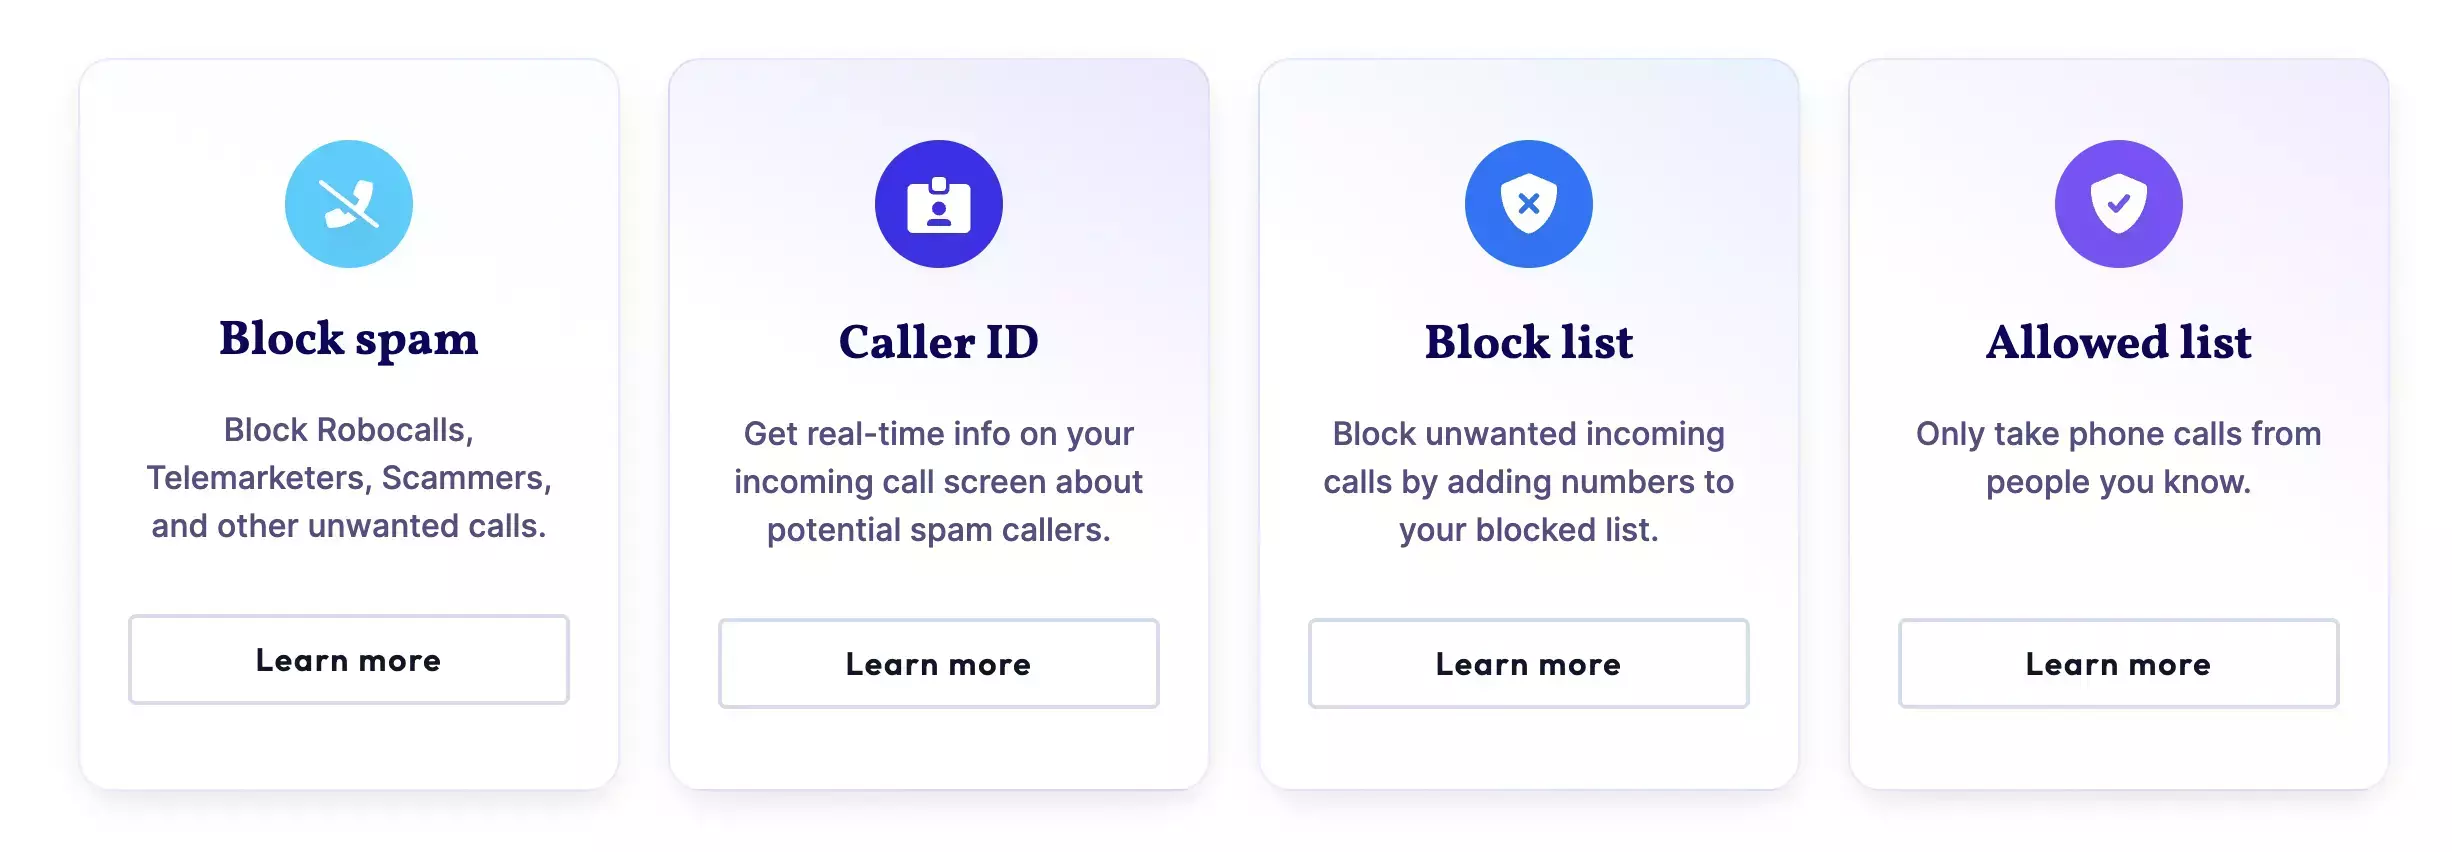 An image of Community Phone Business landline spam call blocker features